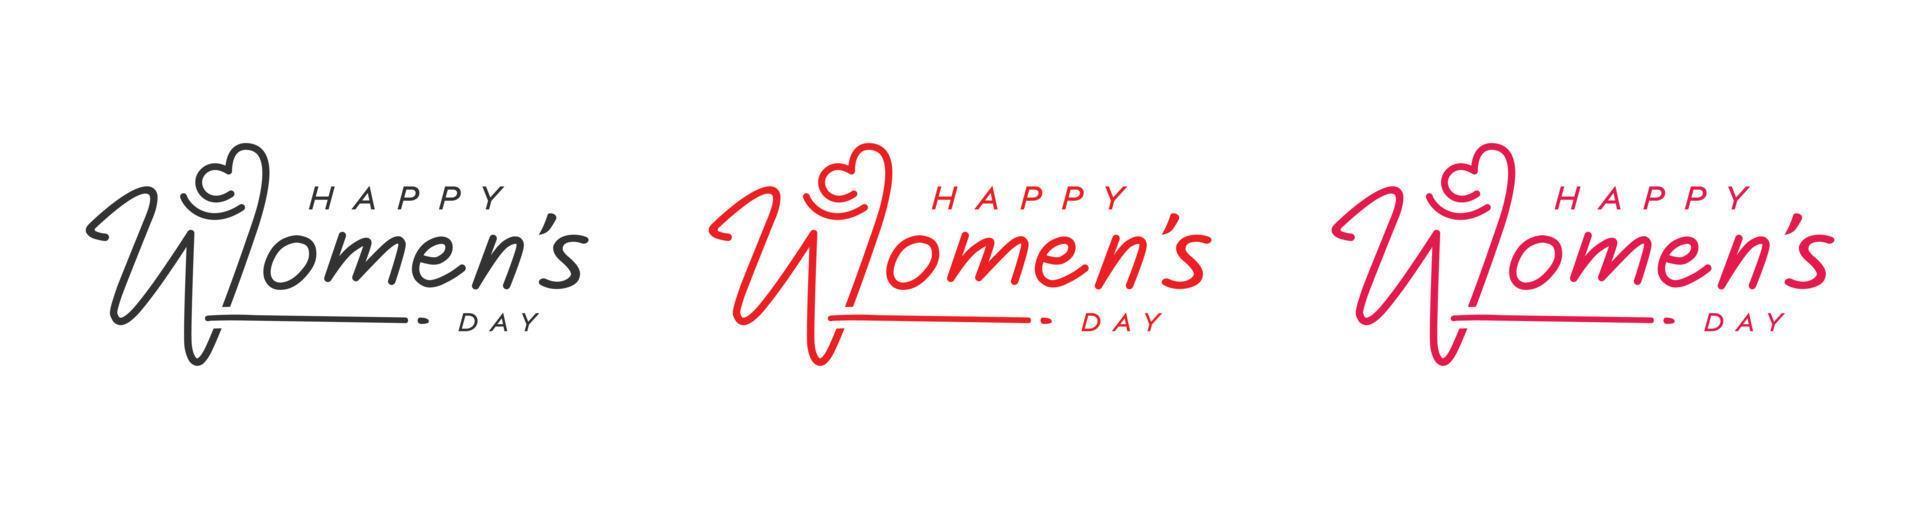 internacional amor para feliz mulheres dia logotipo projeto, adorável marcha 8 feliz mulheres dia vetor logotipo